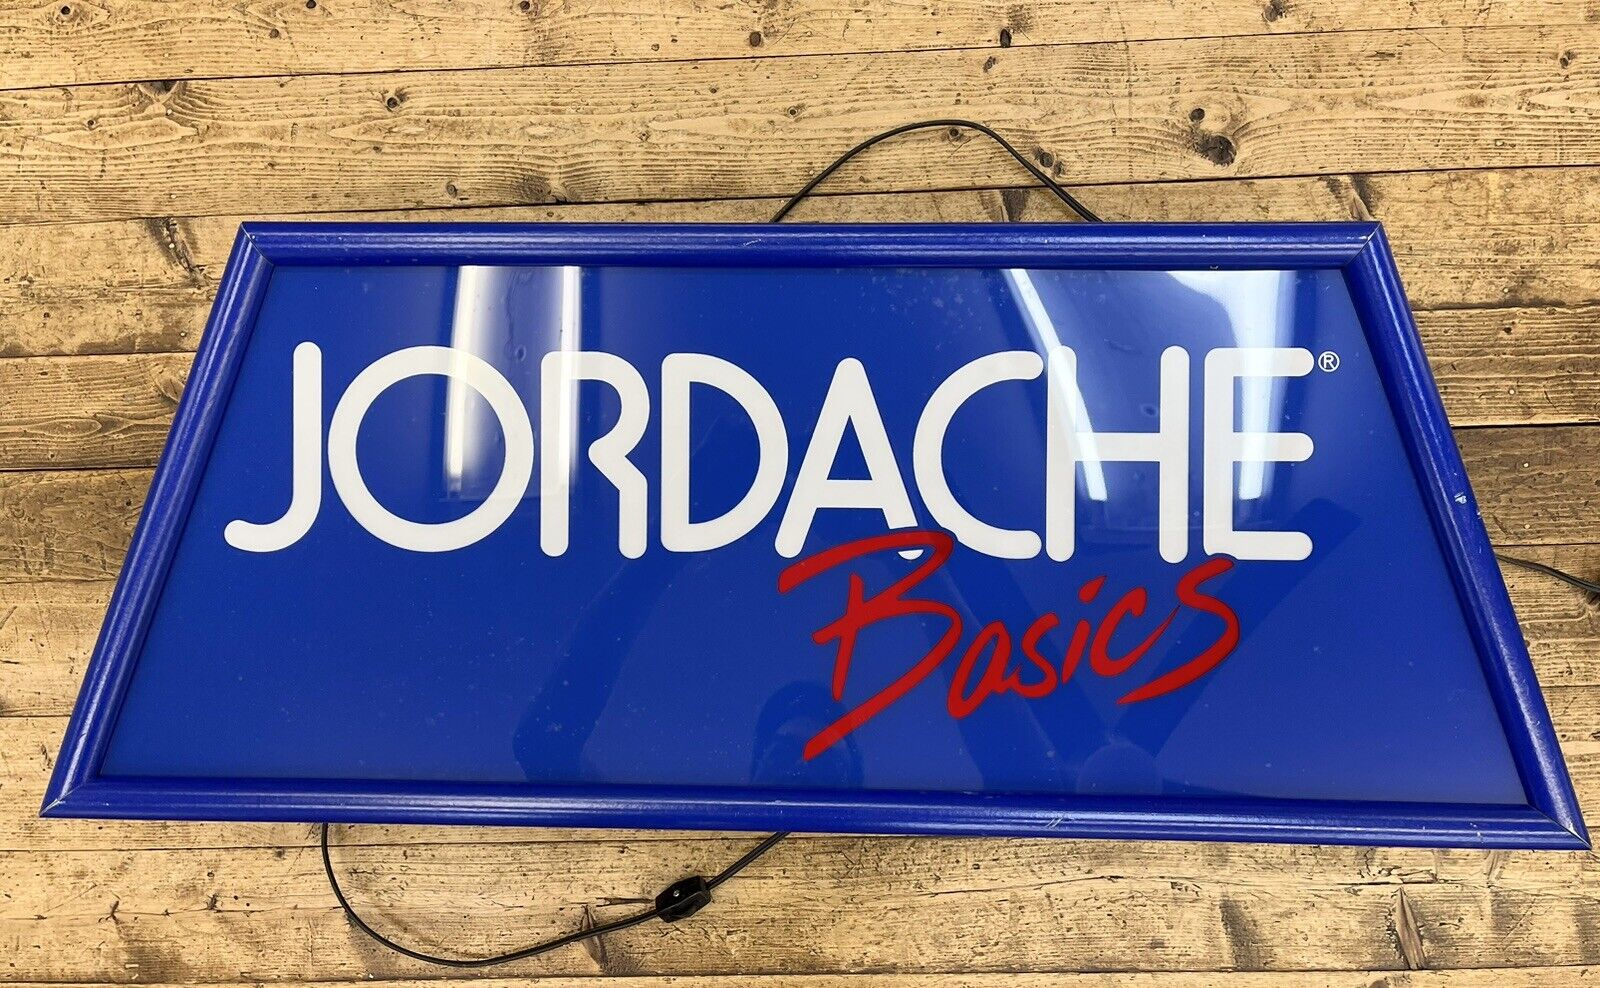 Vintage 80/90’s Jordache jeans Neon Light Up Sign For Store Retail 